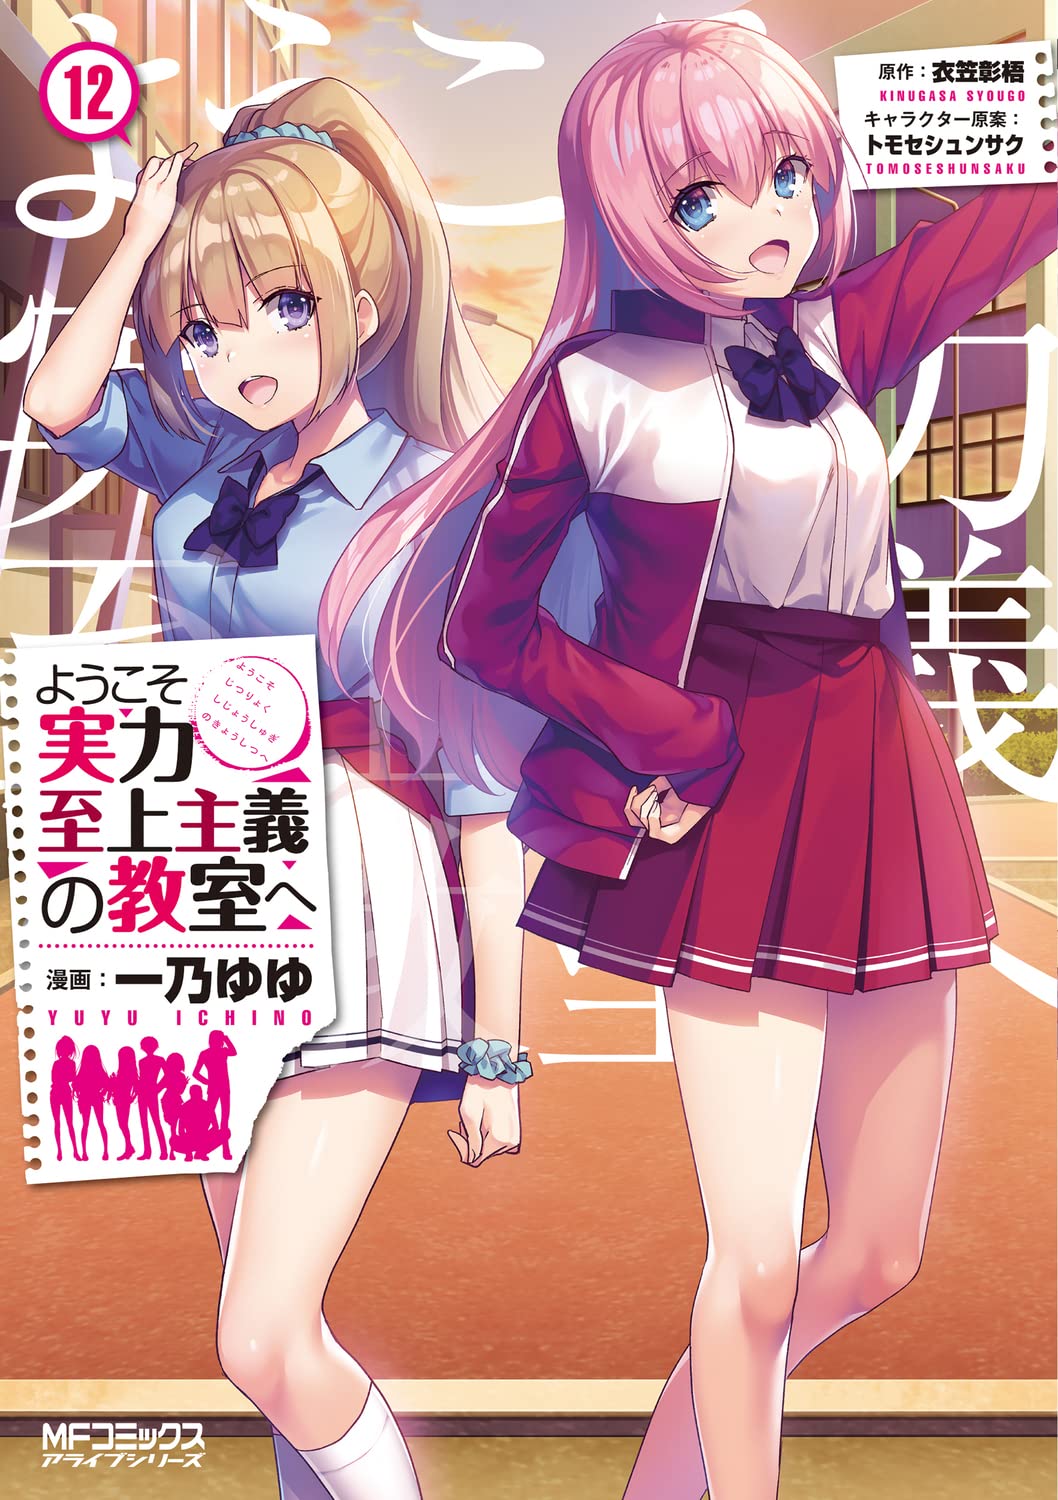 Light Novel Volume 4, You-Zitsu Wiki